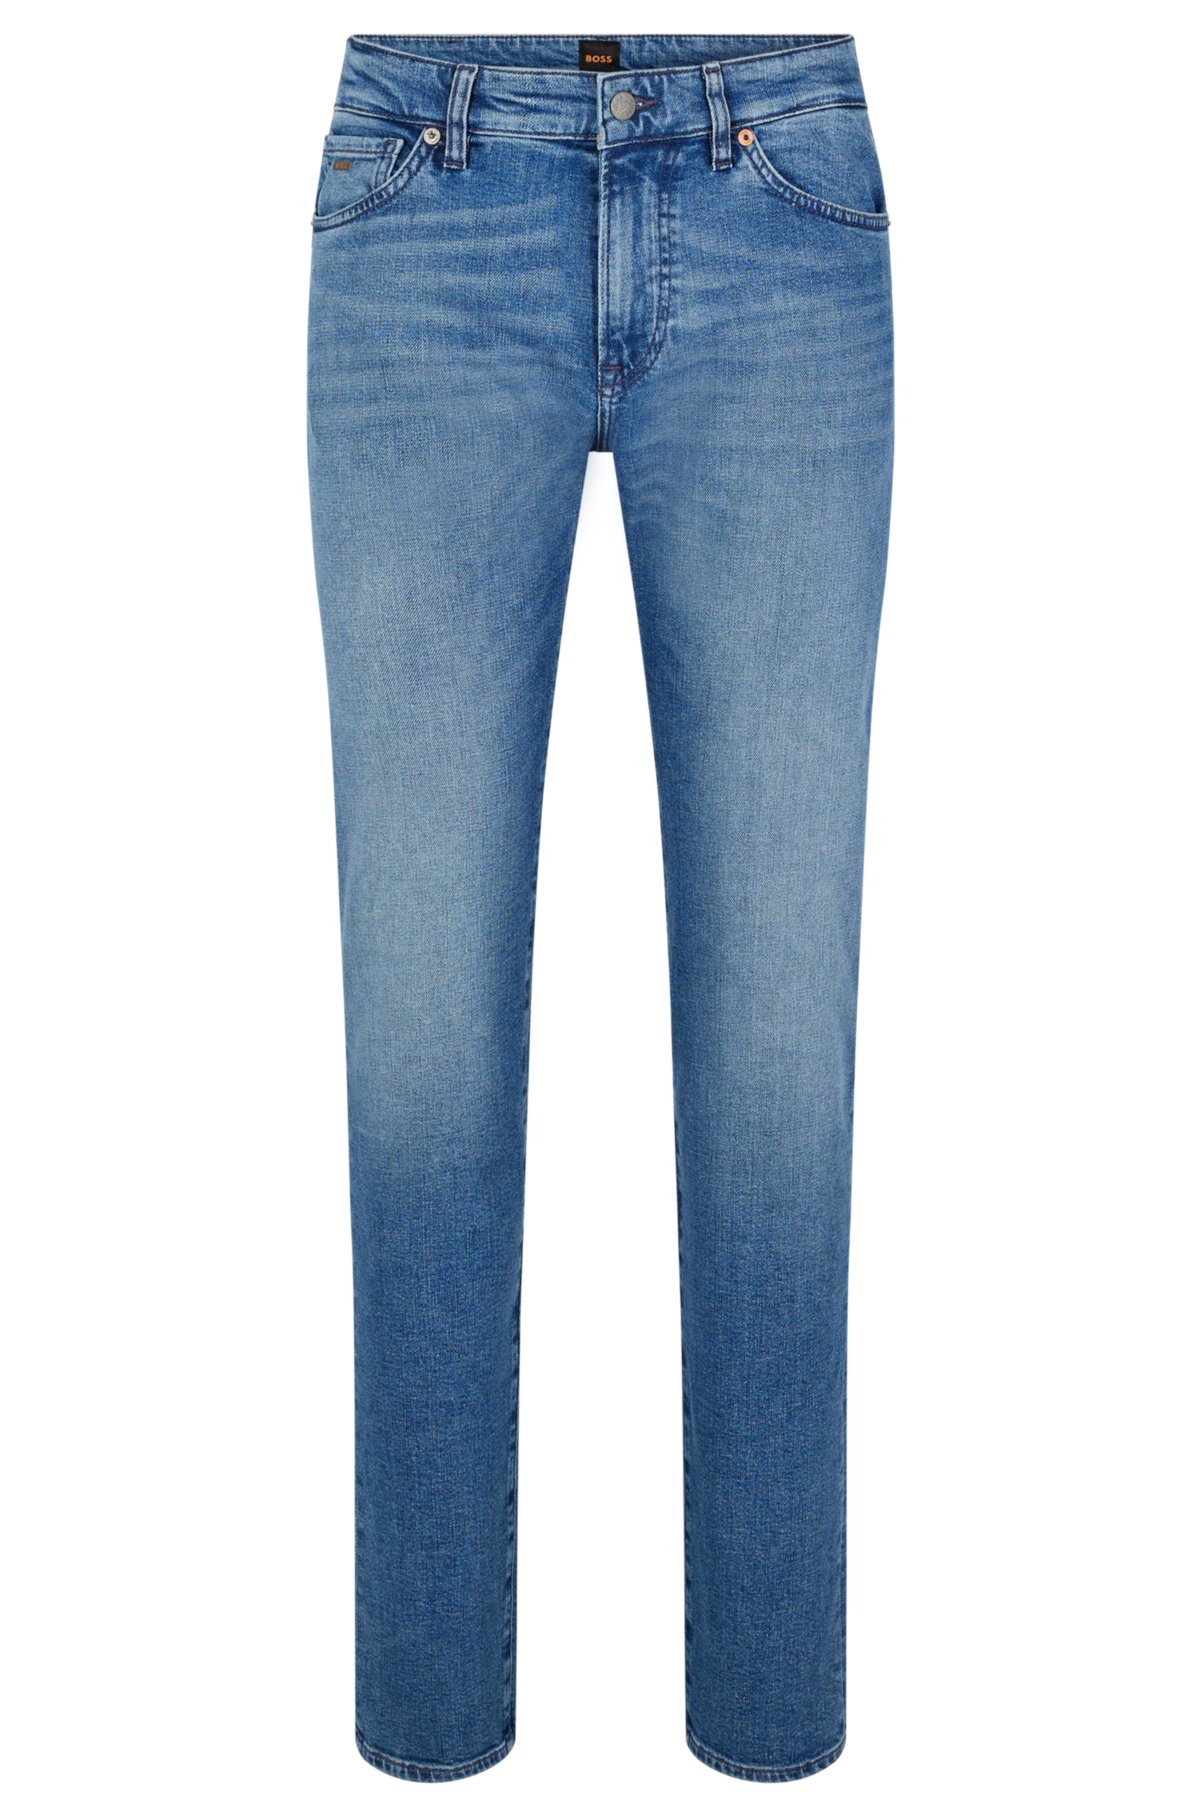 BOSS - Blaue Regular-Fit Jeans aus bequemem Stretch-Denim